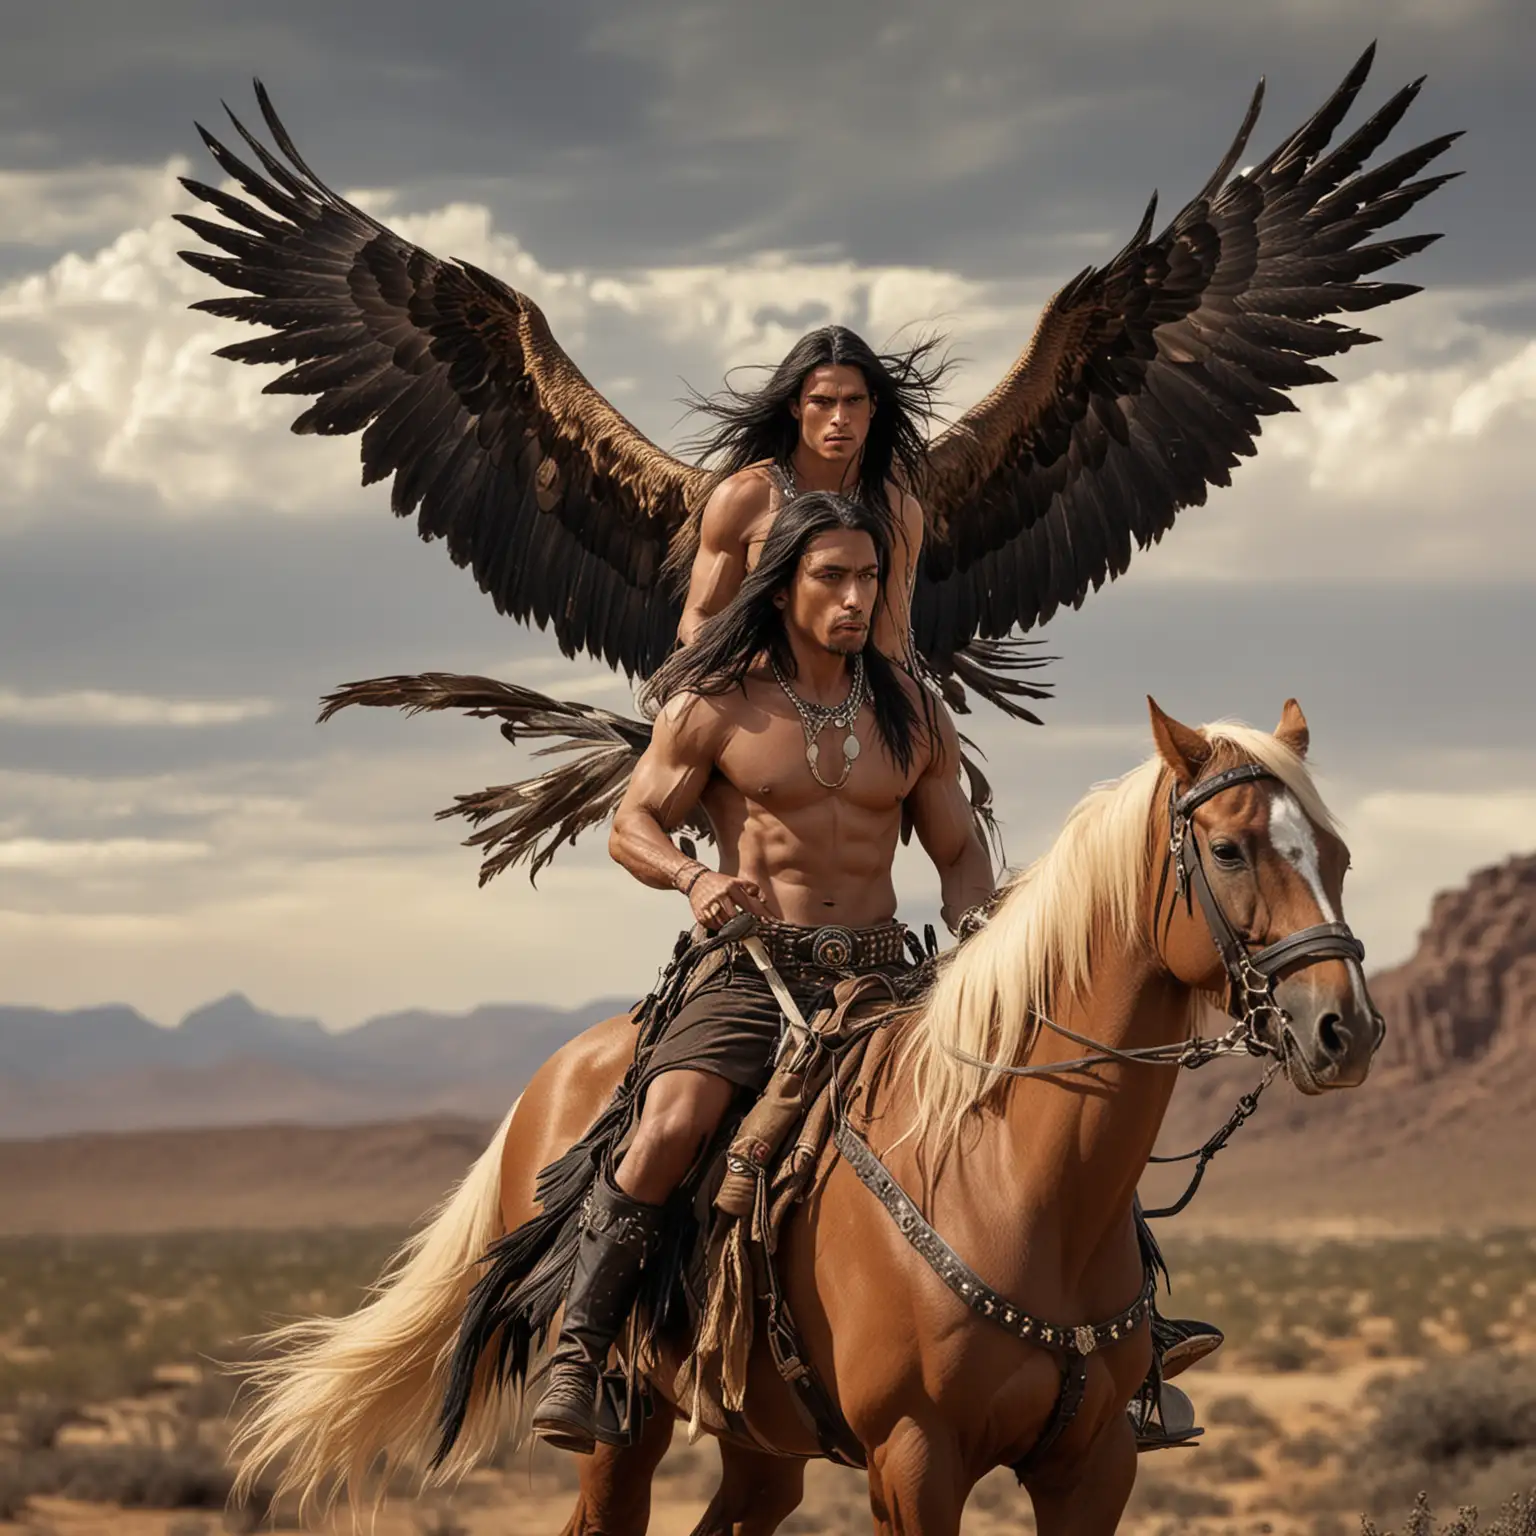 Handsome Apache Warrior Soaring Over Desert Pursued by Two Blondes on Horseback